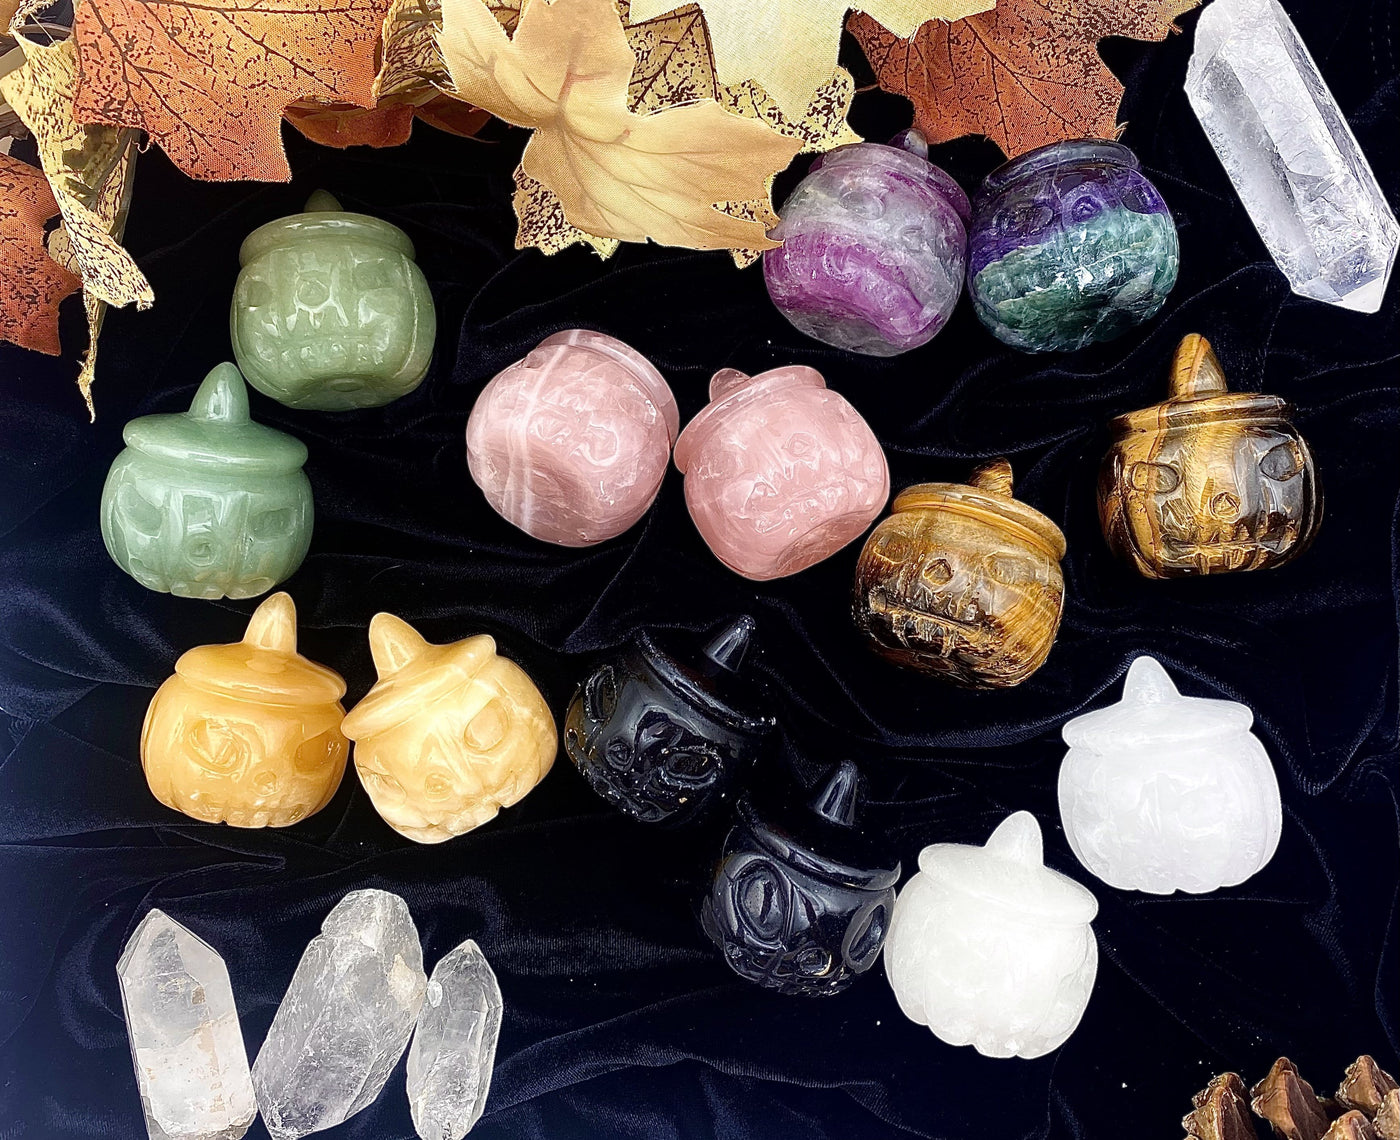 14 Carved Pumpkin Jack-o'-lantern Gemstones , 2 of each available stone, displayed on a dark velvet surface.